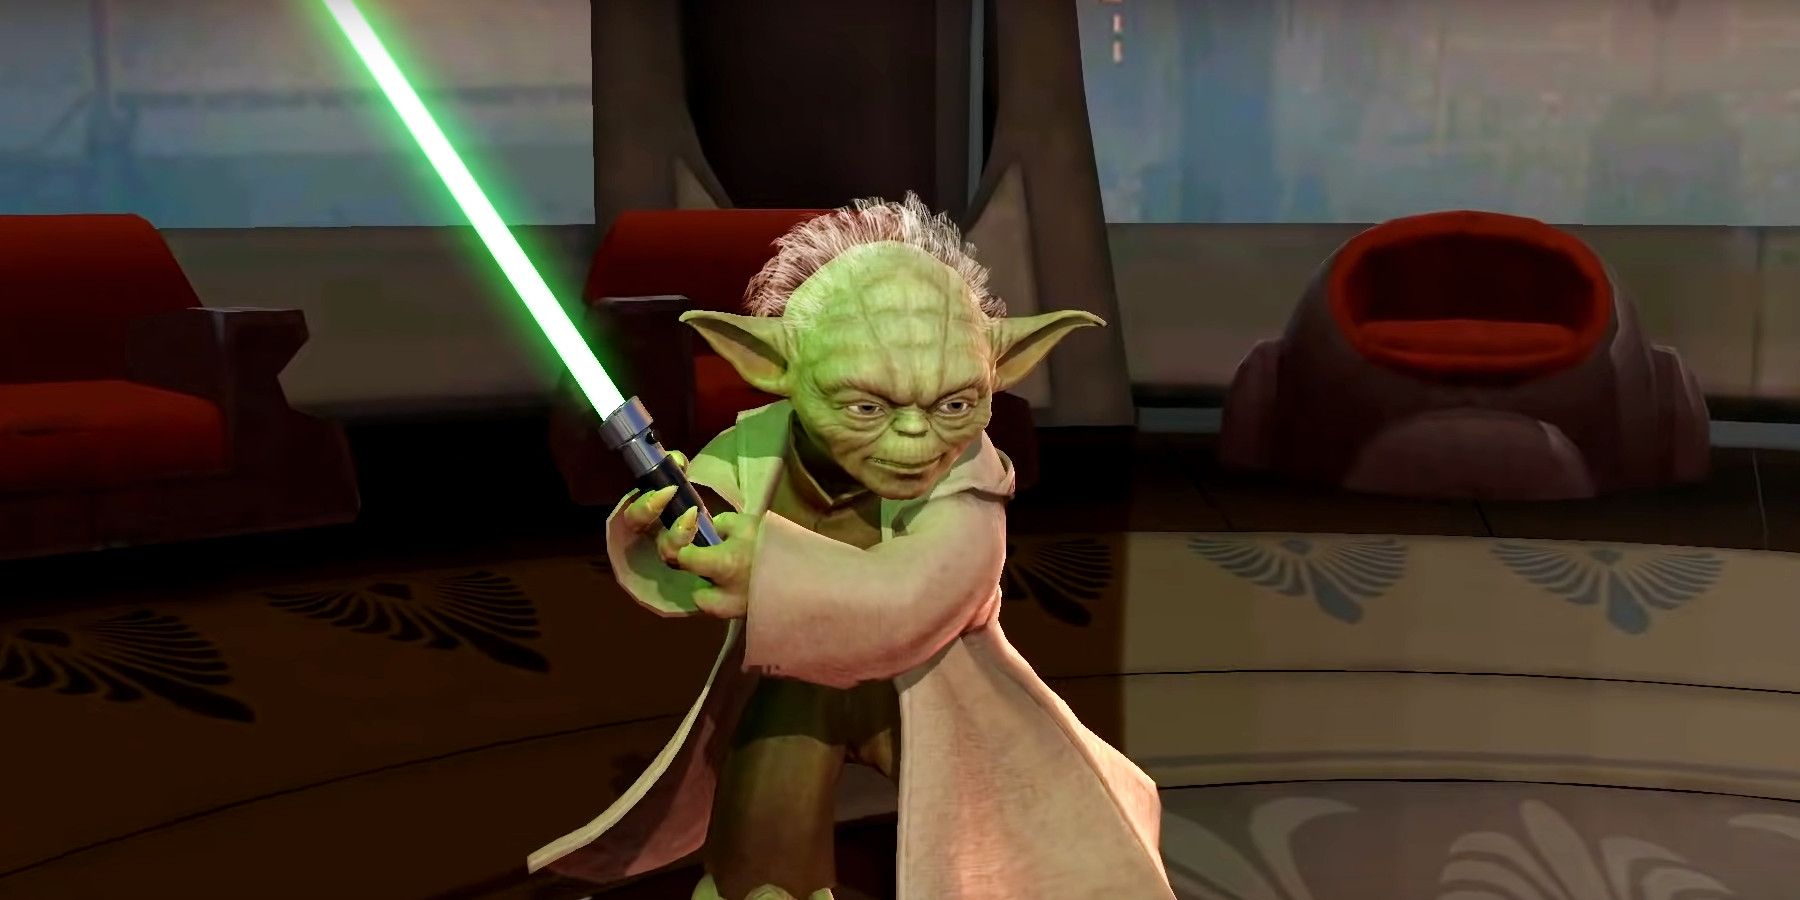 Cómo obtener al cíclope “Master Yoda” en Mobile Legends: Bang Bang